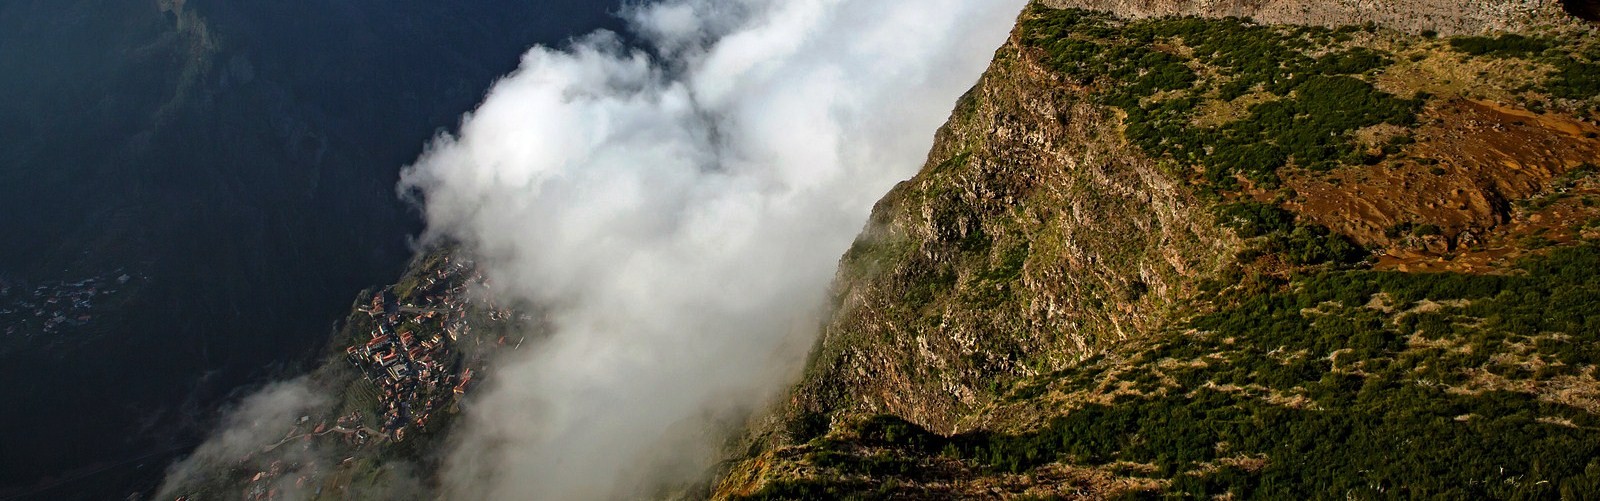 Paredao View Point in Curral Das Freiras, Madeira Island